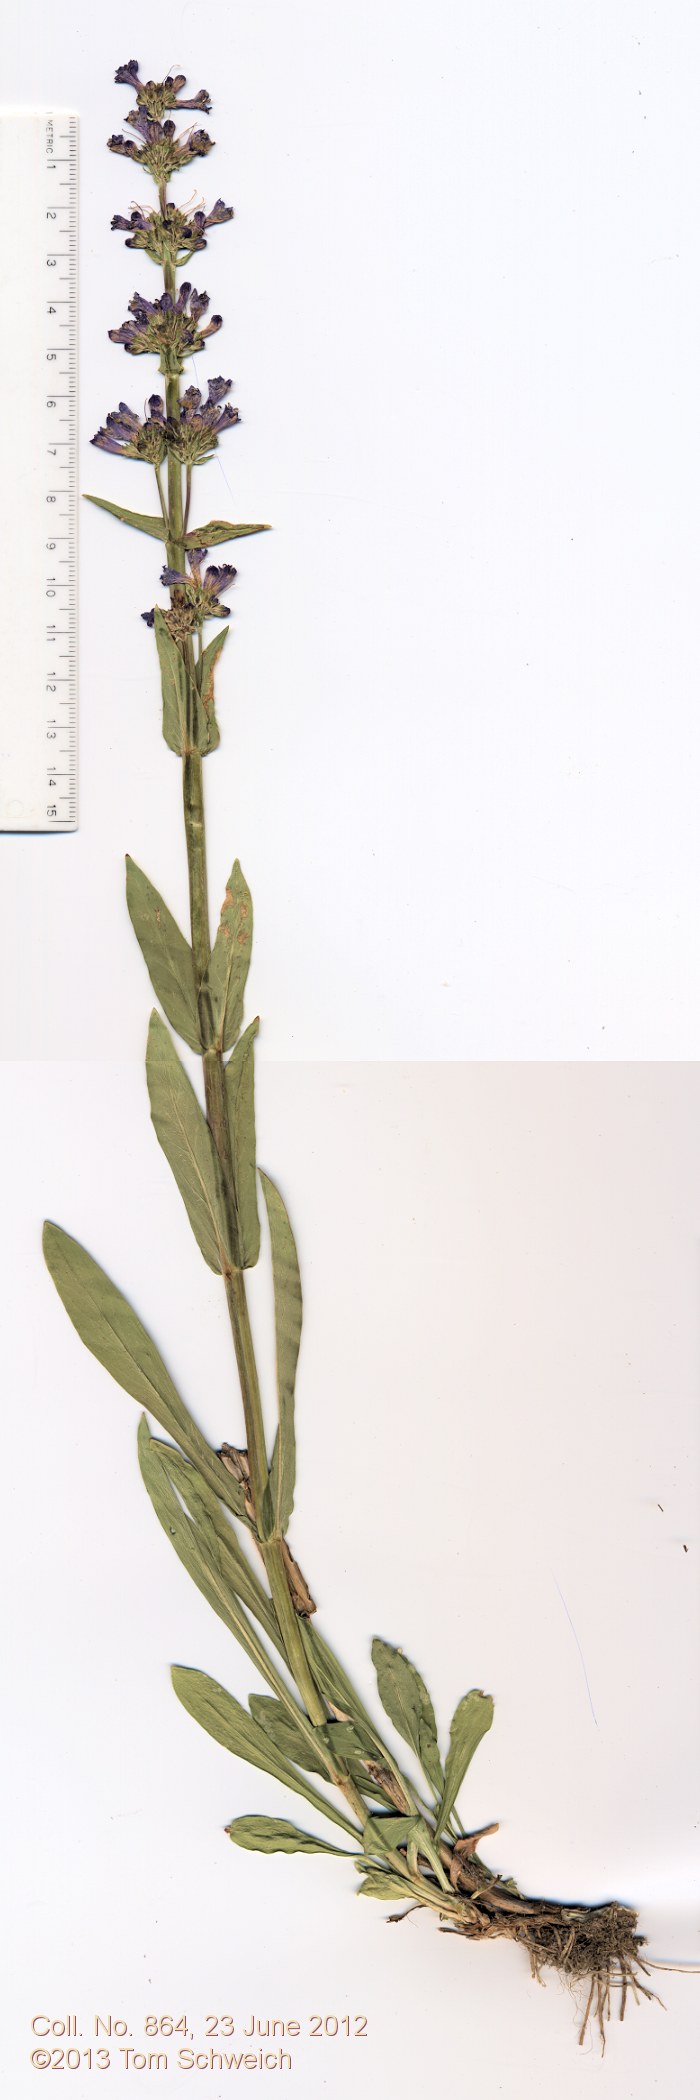 Plantaginaceae Penstemon rydbergii oreocharis